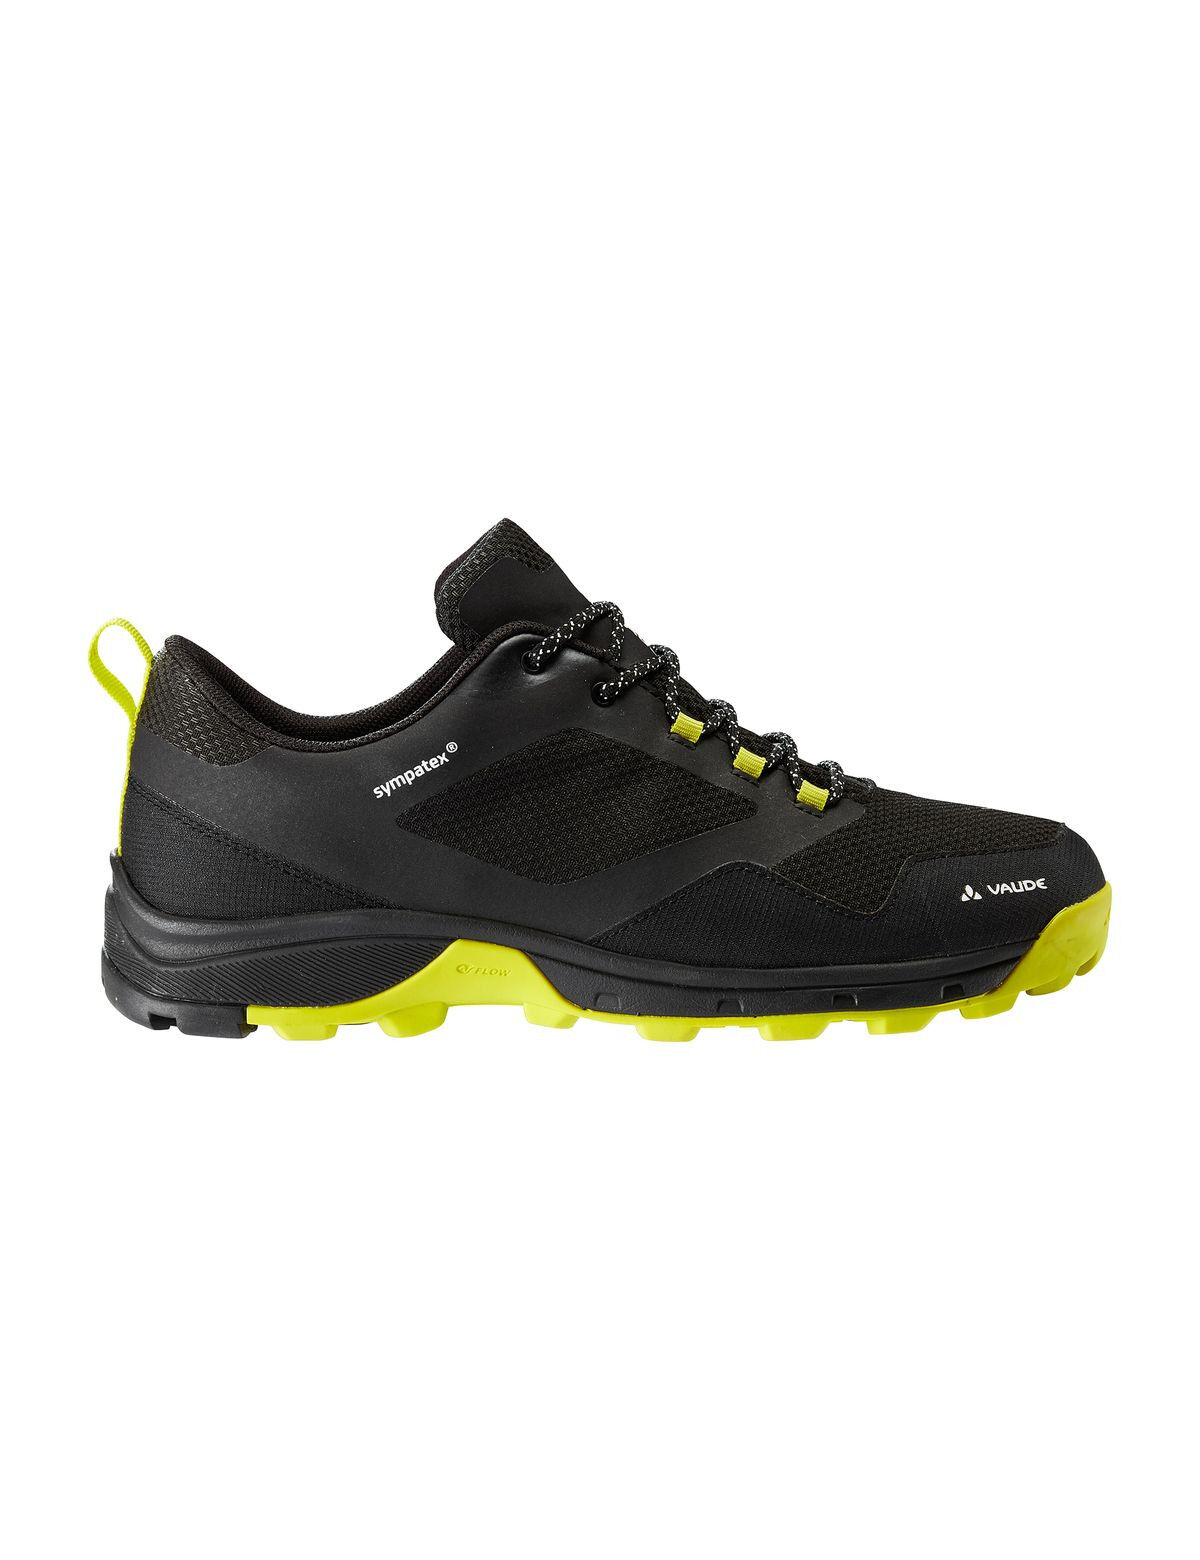 Vaude TVL Comrus Tech STX - Walking Boots - Men's